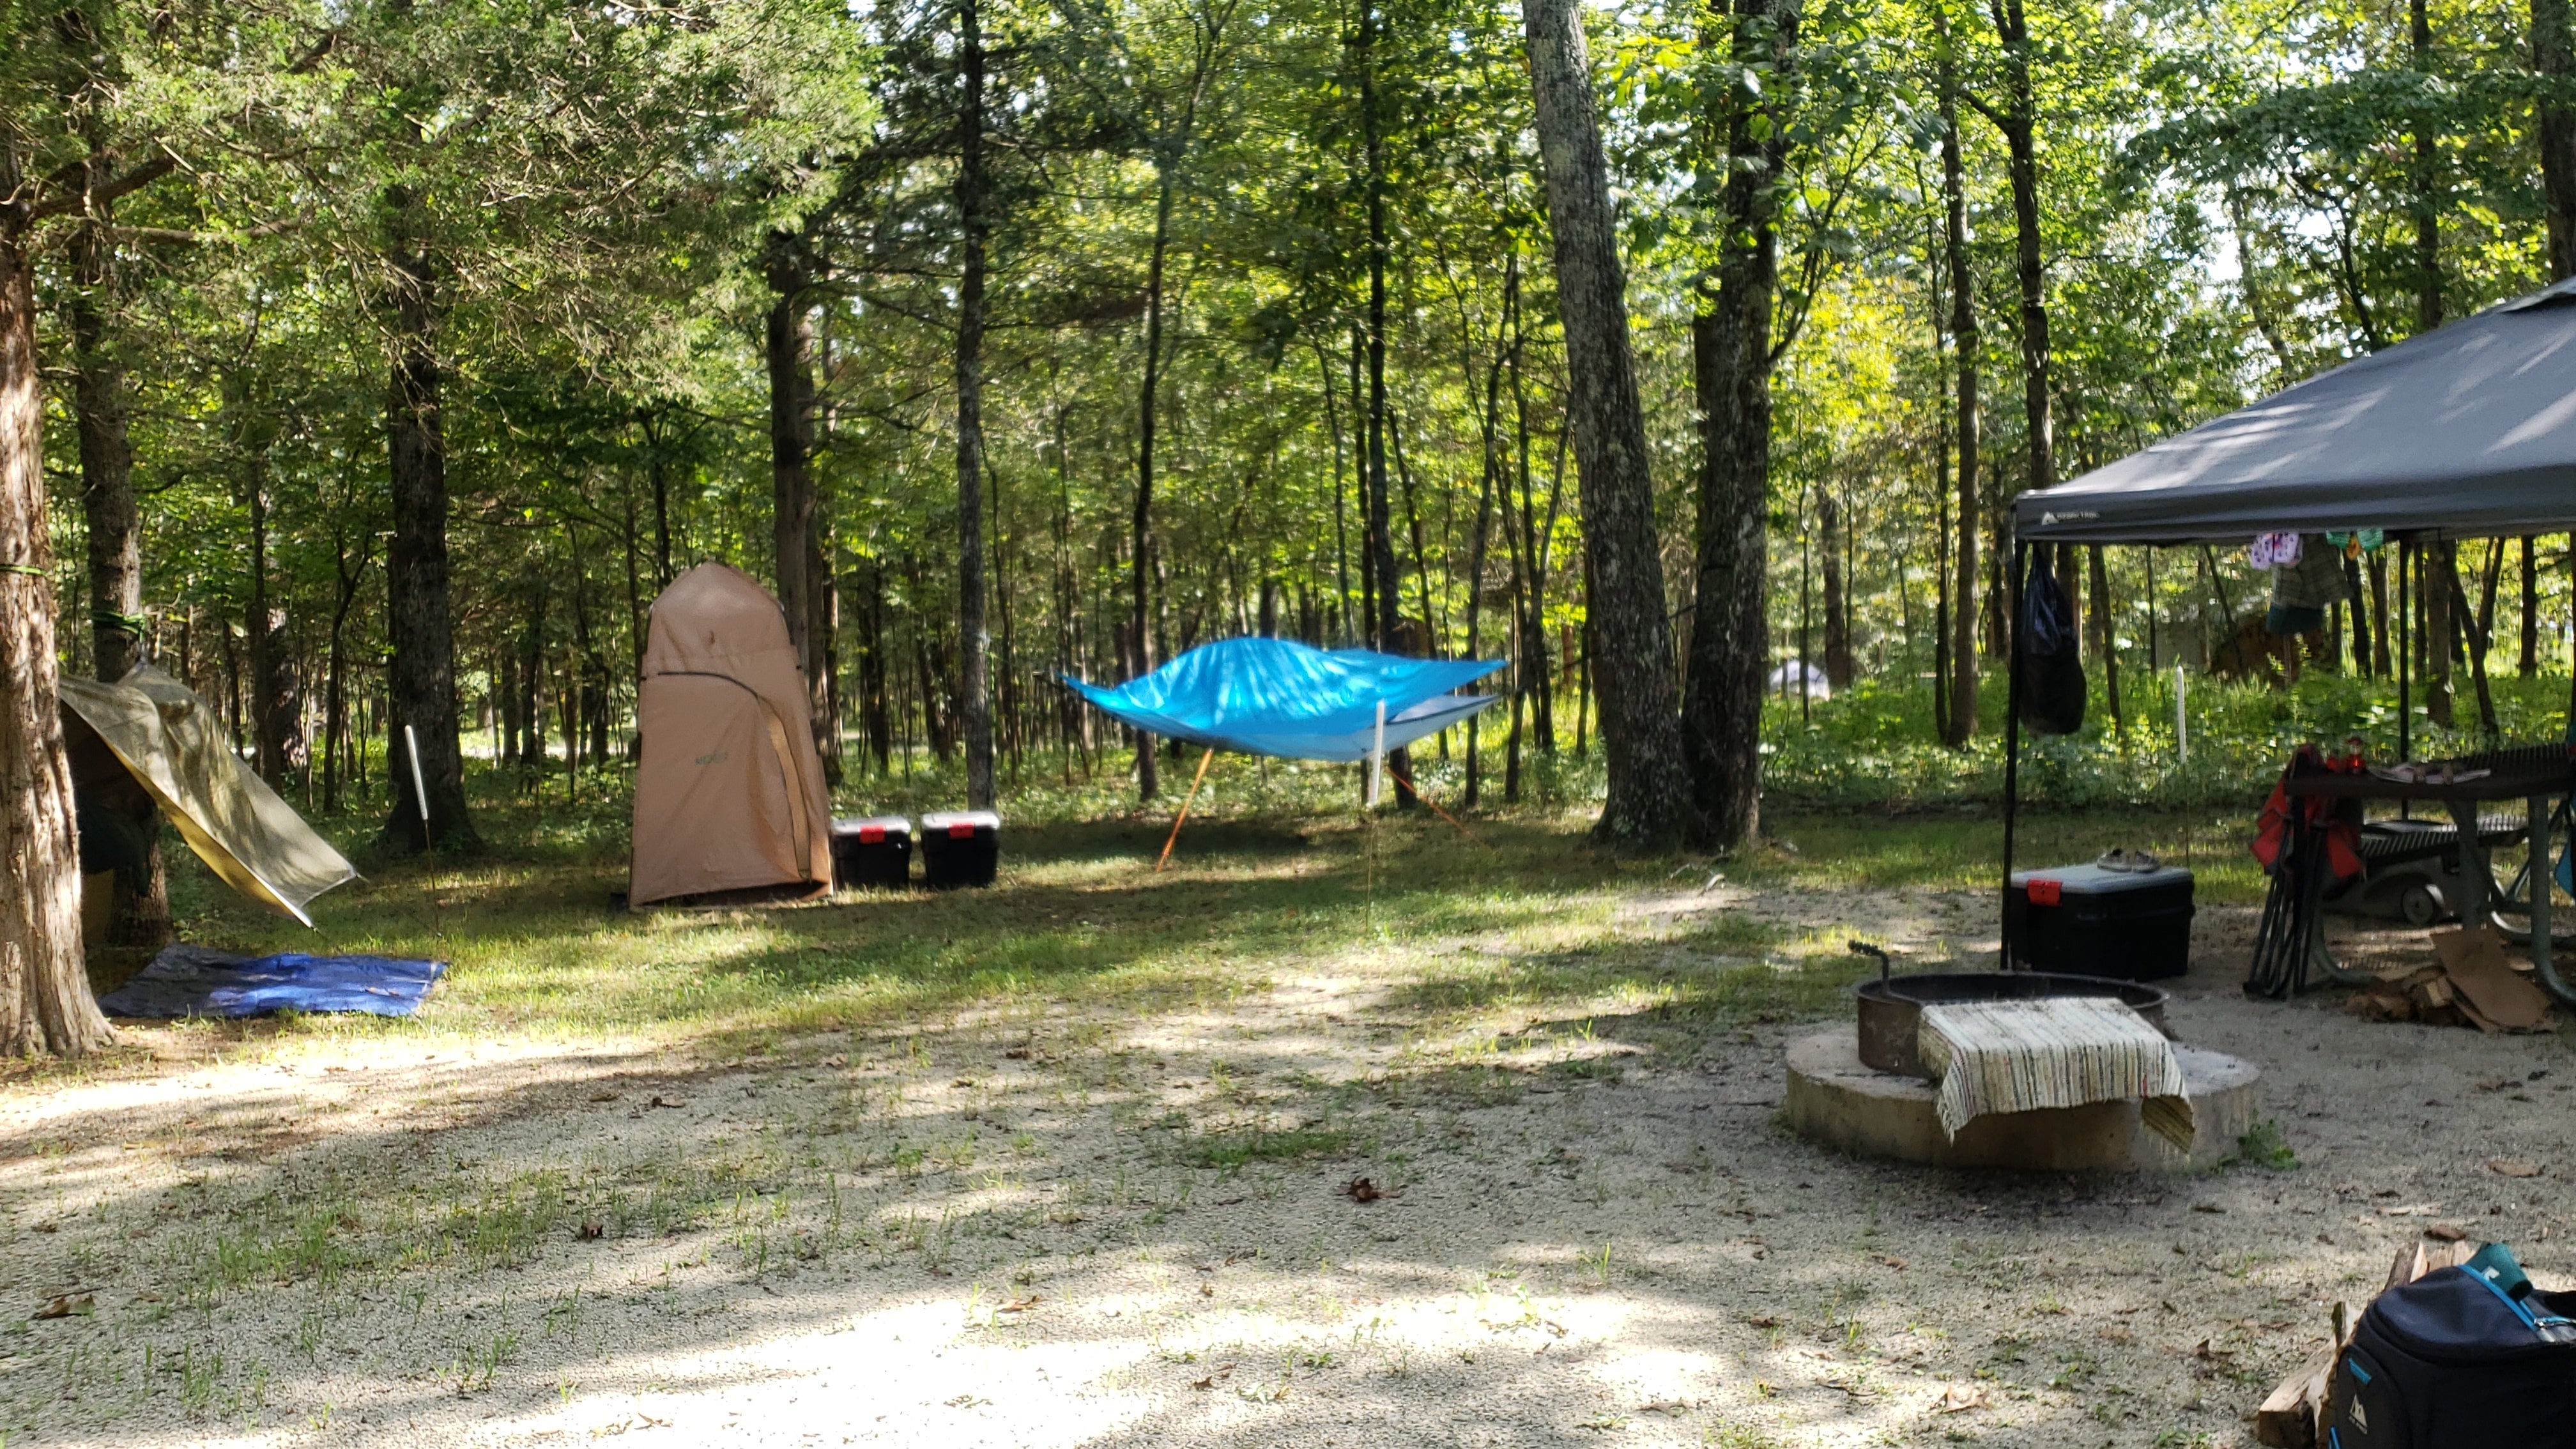 Our basic regular campsite